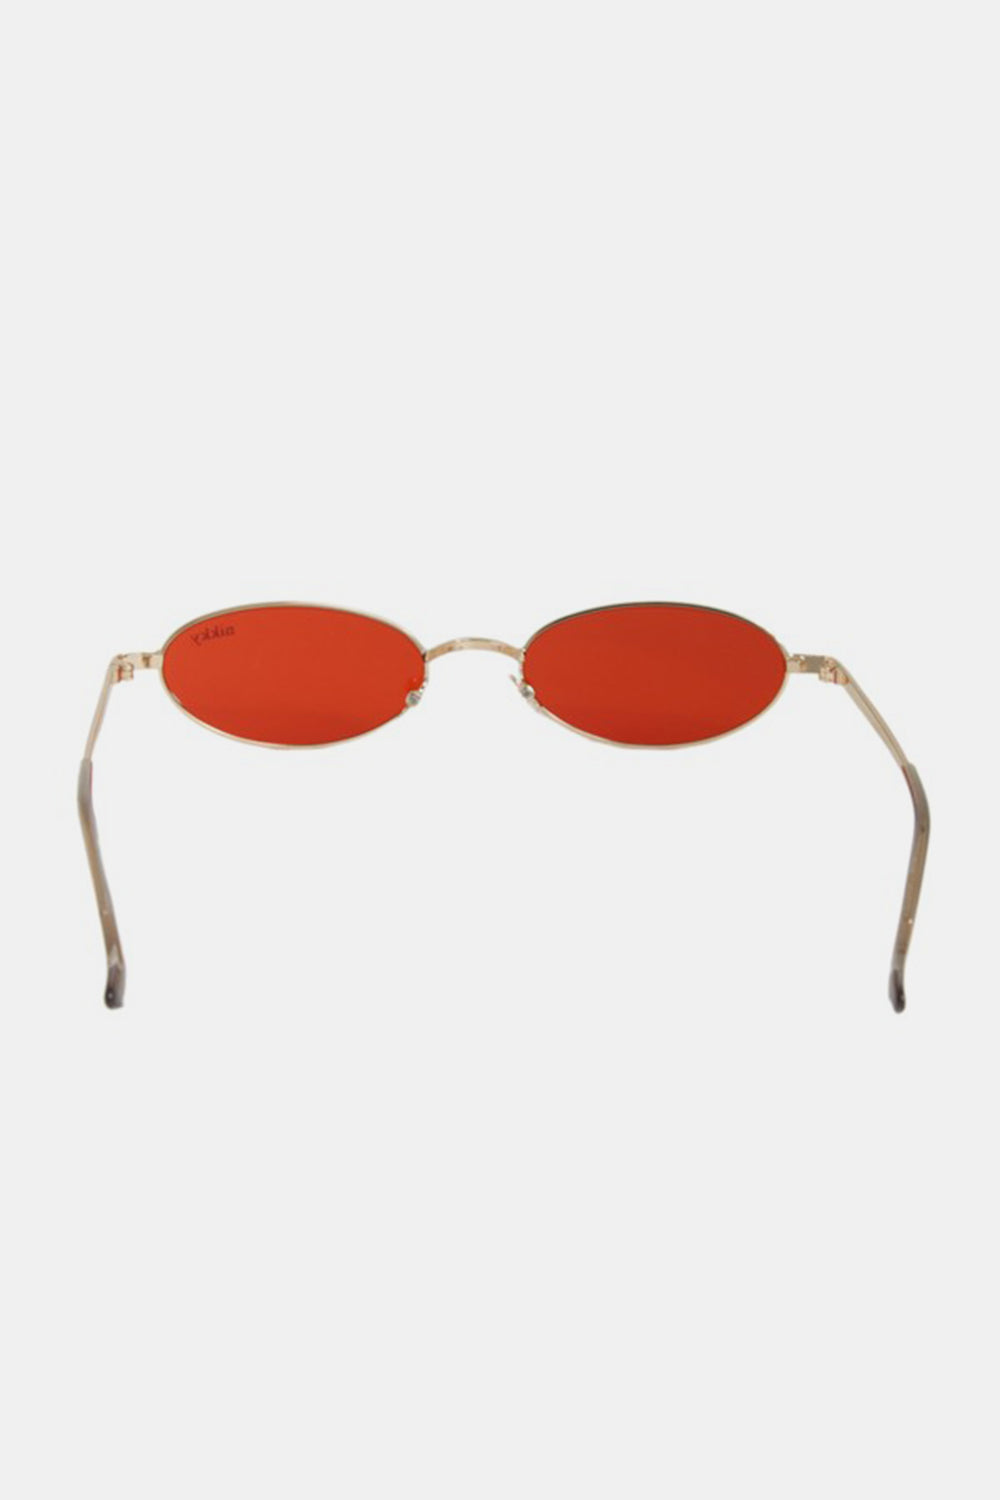 Nicole Lee USA Metal Frame Finley Oval Sunglasses Trendsi